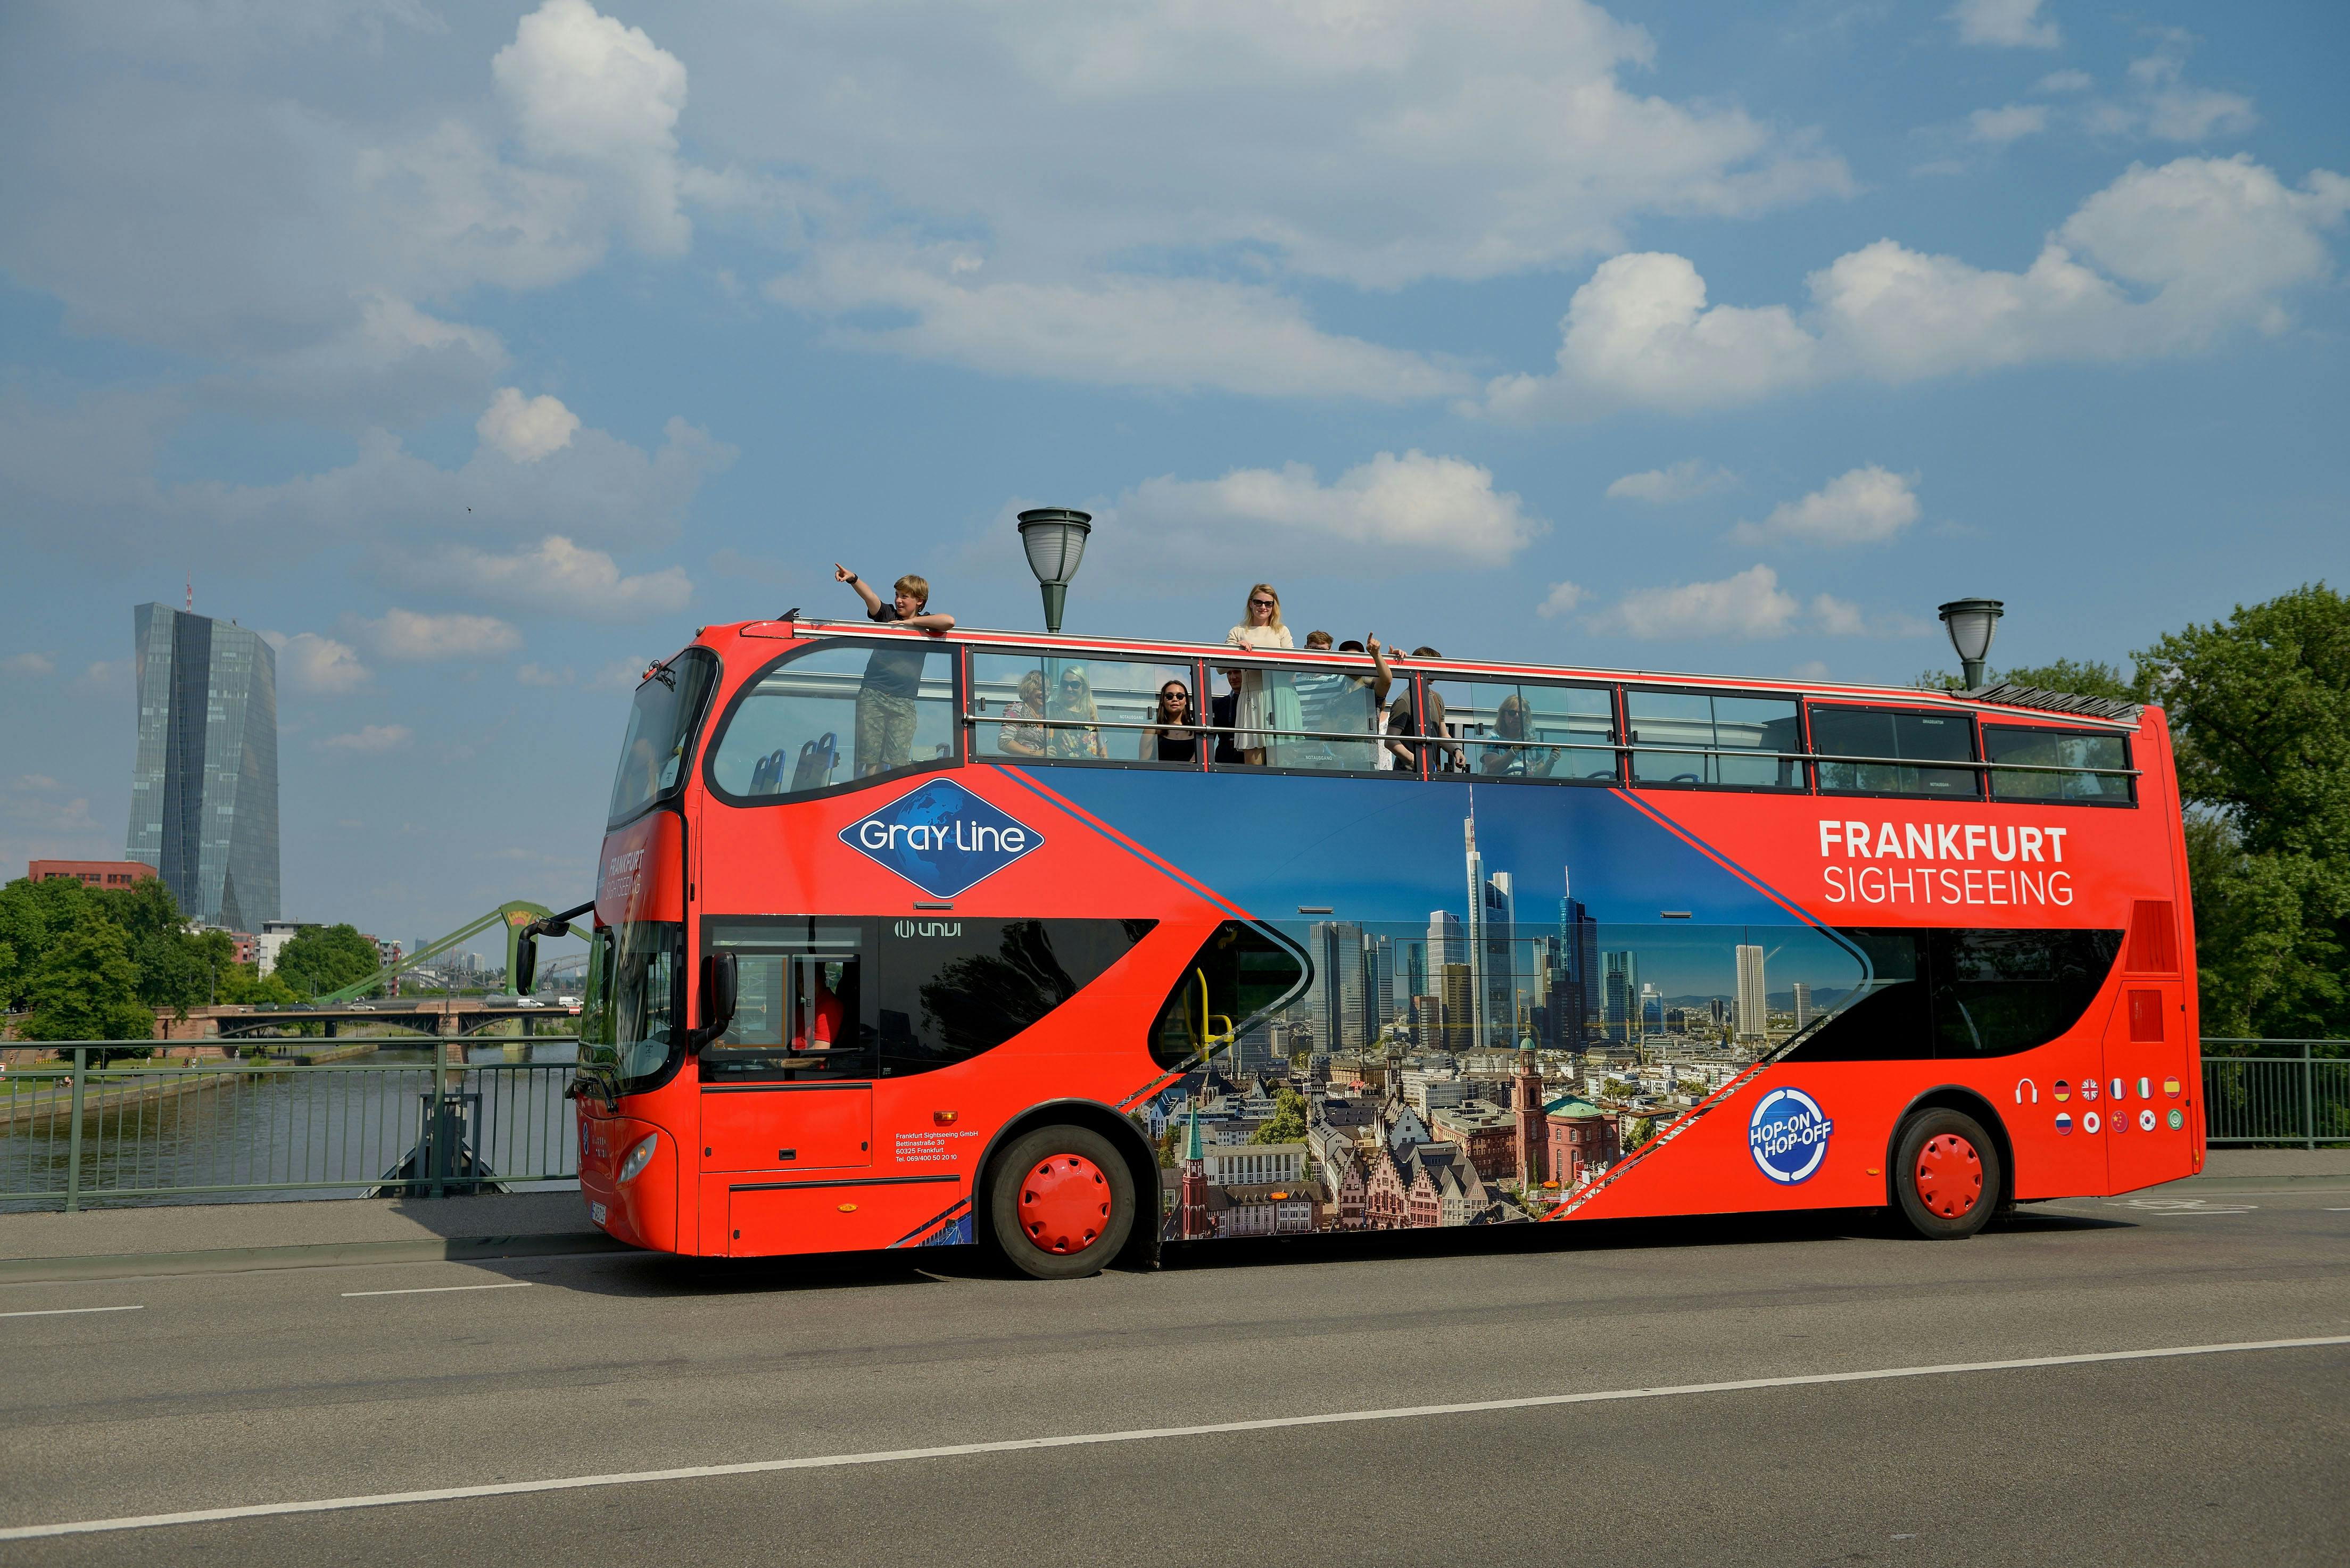 Tour expresso de Frankfurt de ônibus